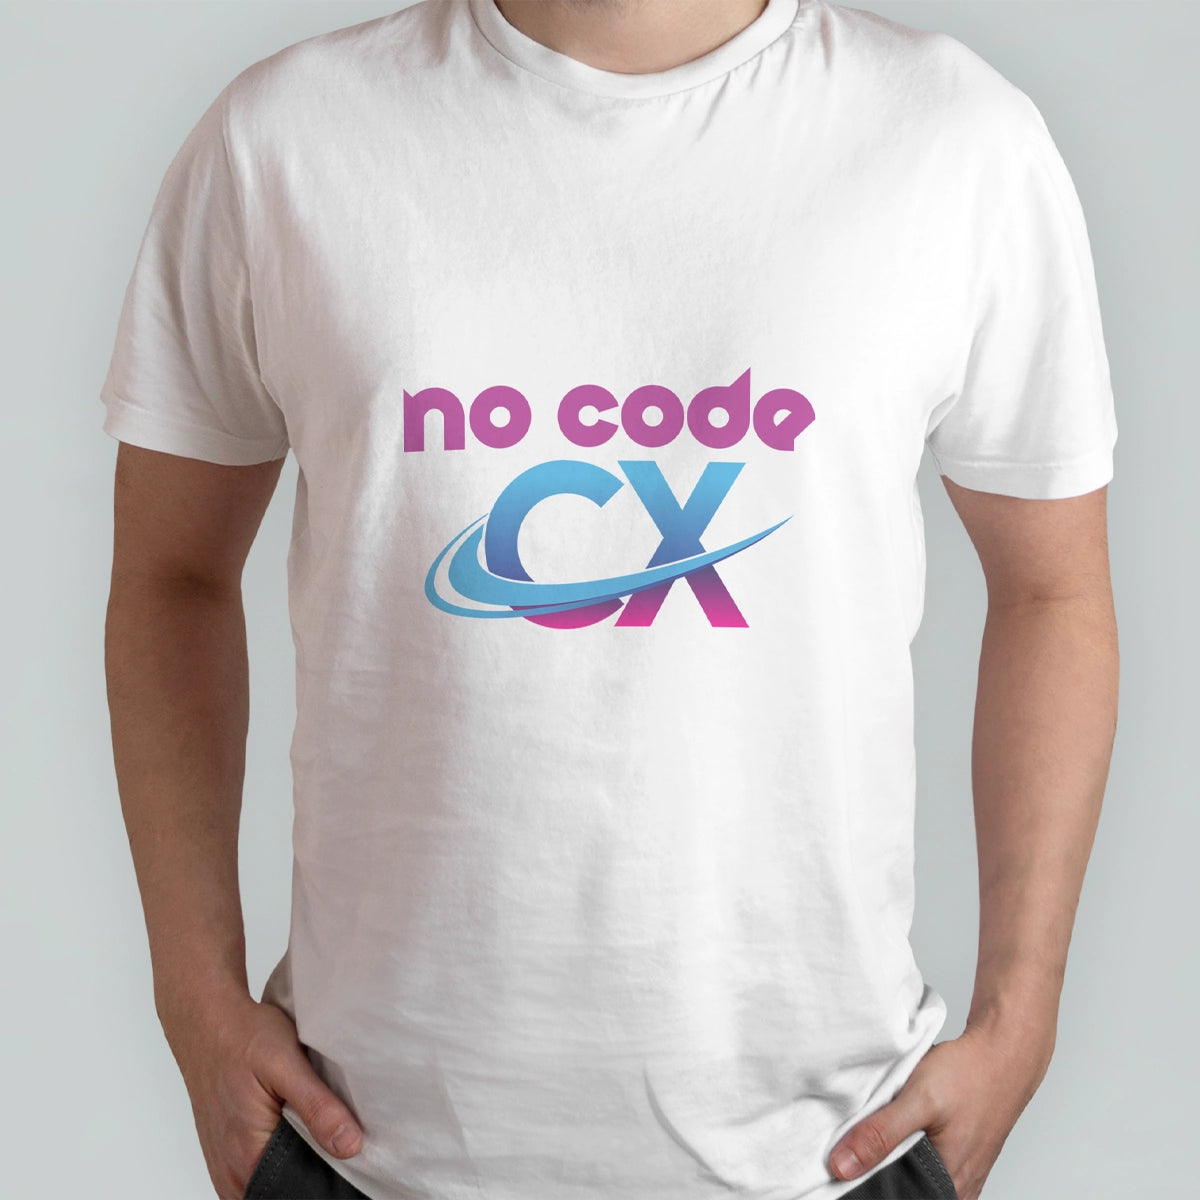 nocodecx.com